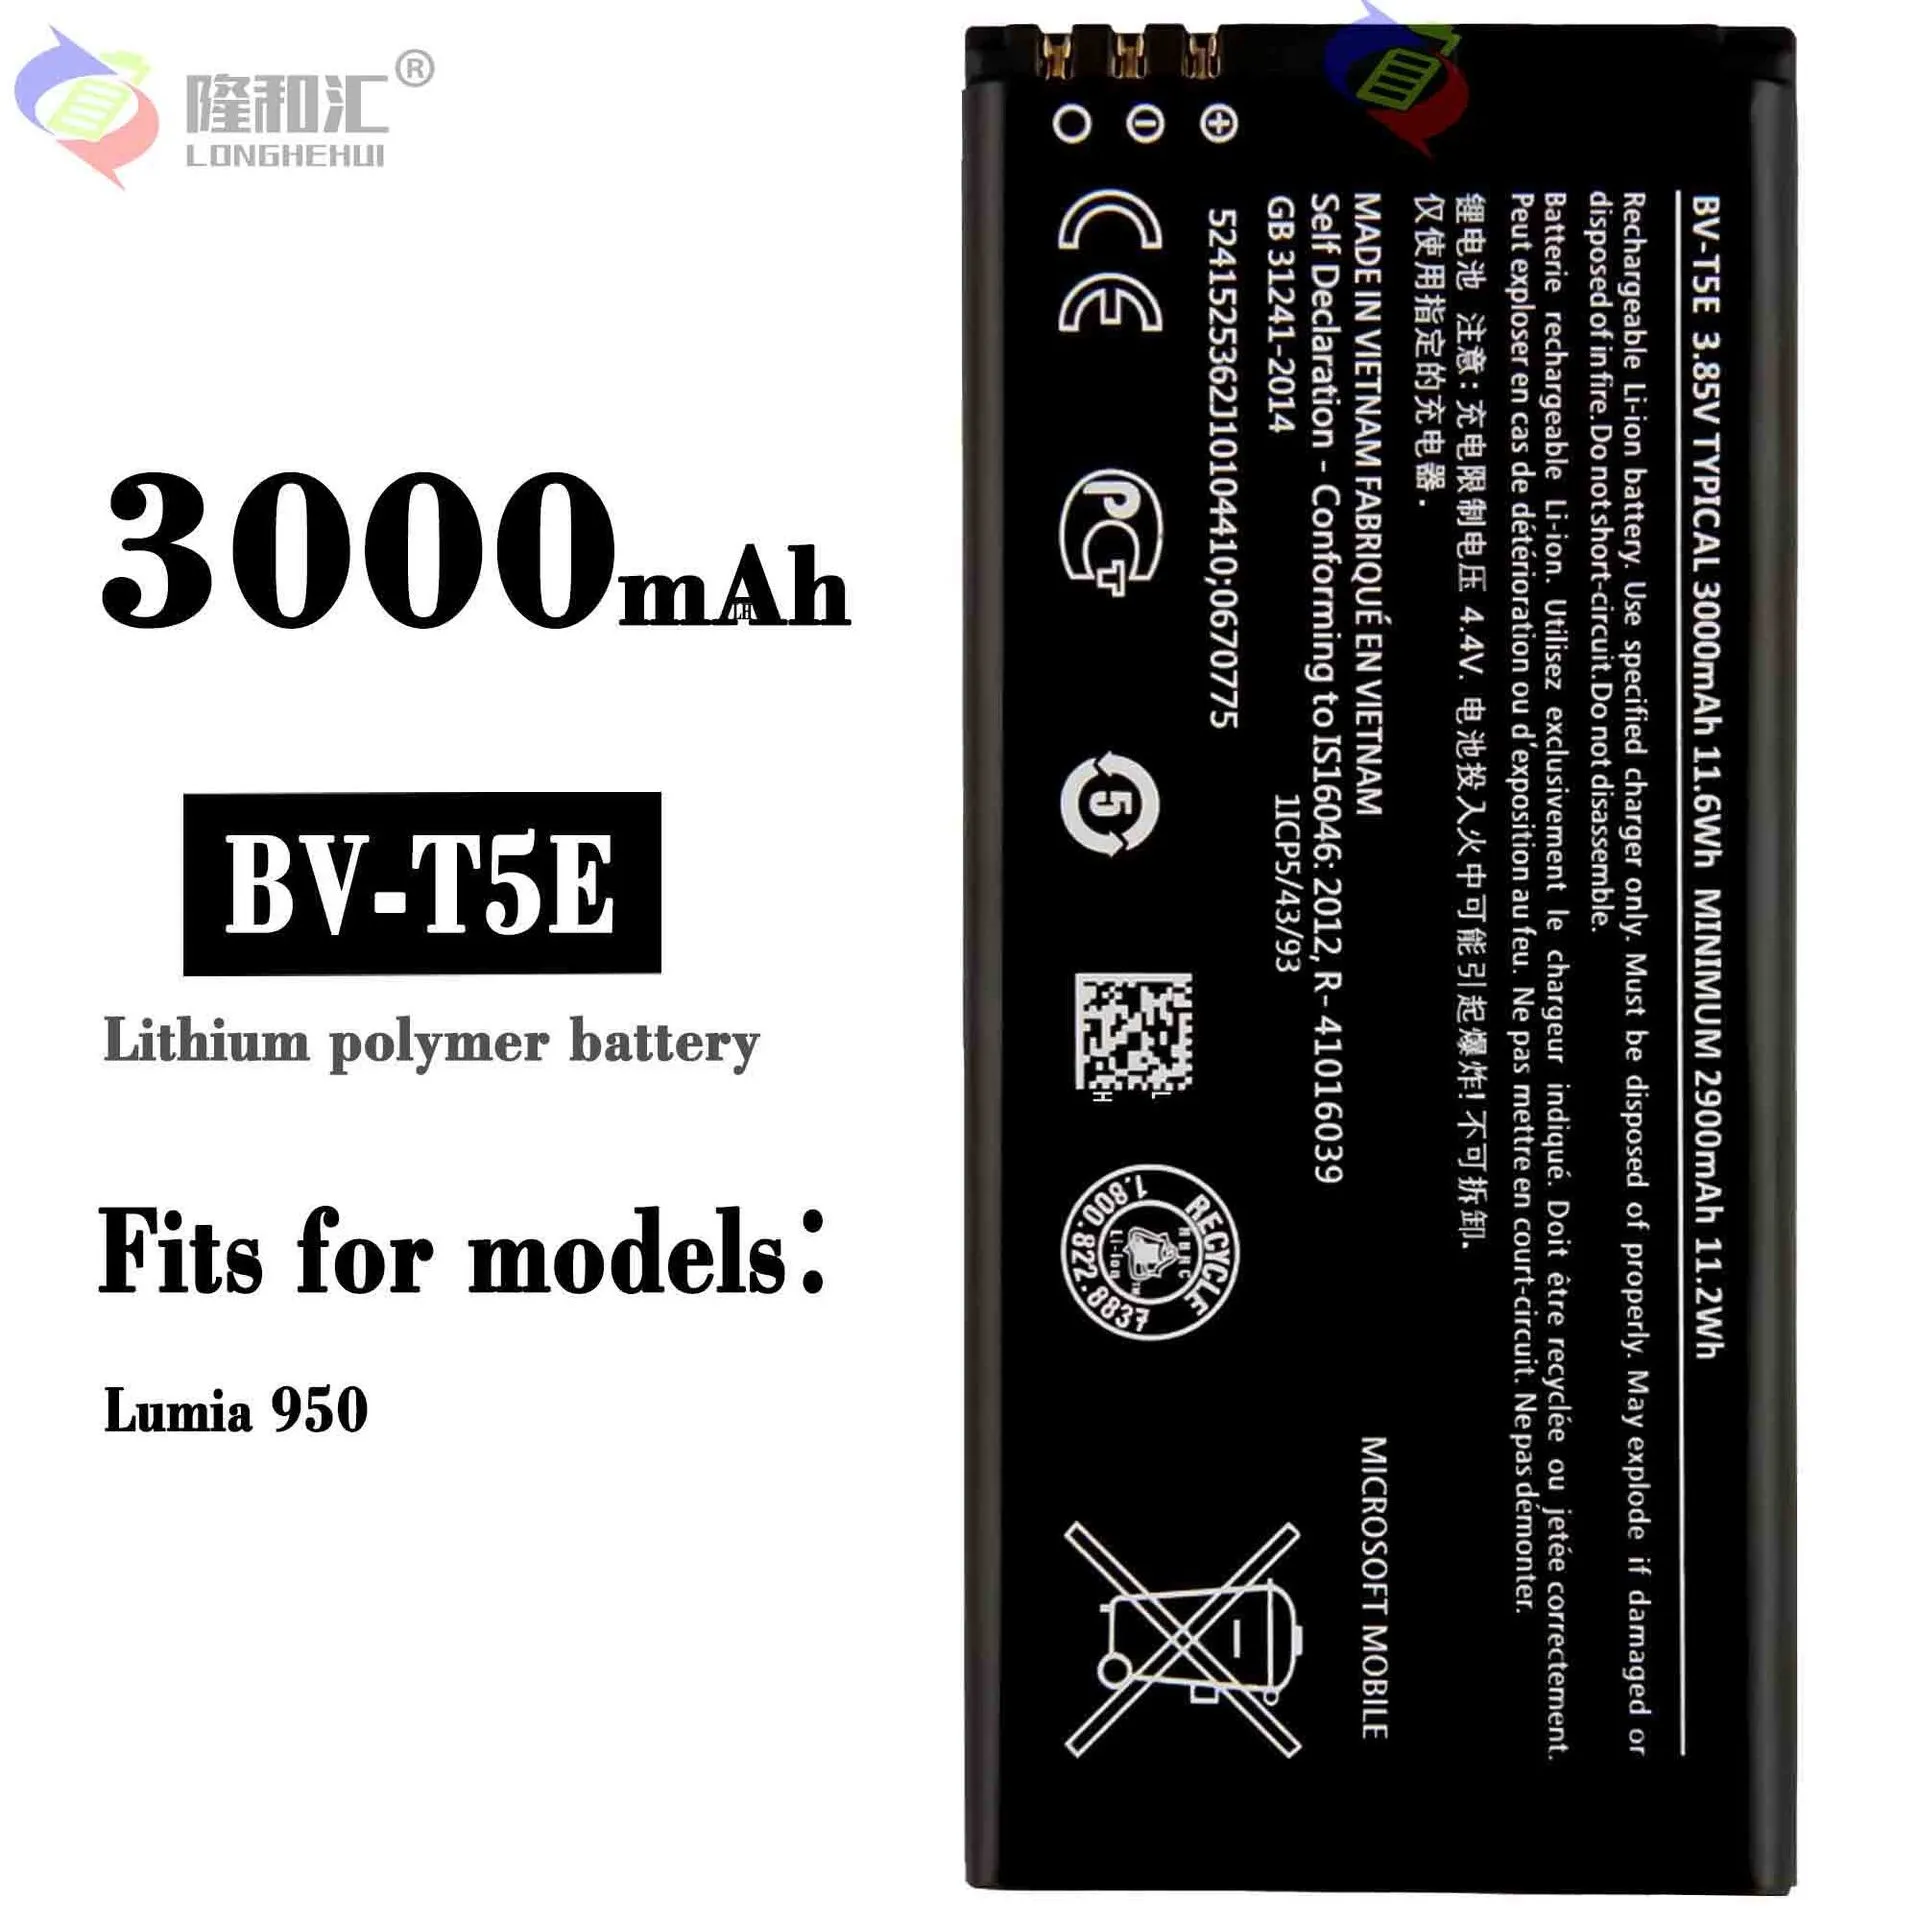 Enlarge 3000mAh BV-T5E battery for Microsoft Nokia Lumia 950 RM-1104 RM-1106 RM-110 BVT5E BV T5E Mobile phone battery